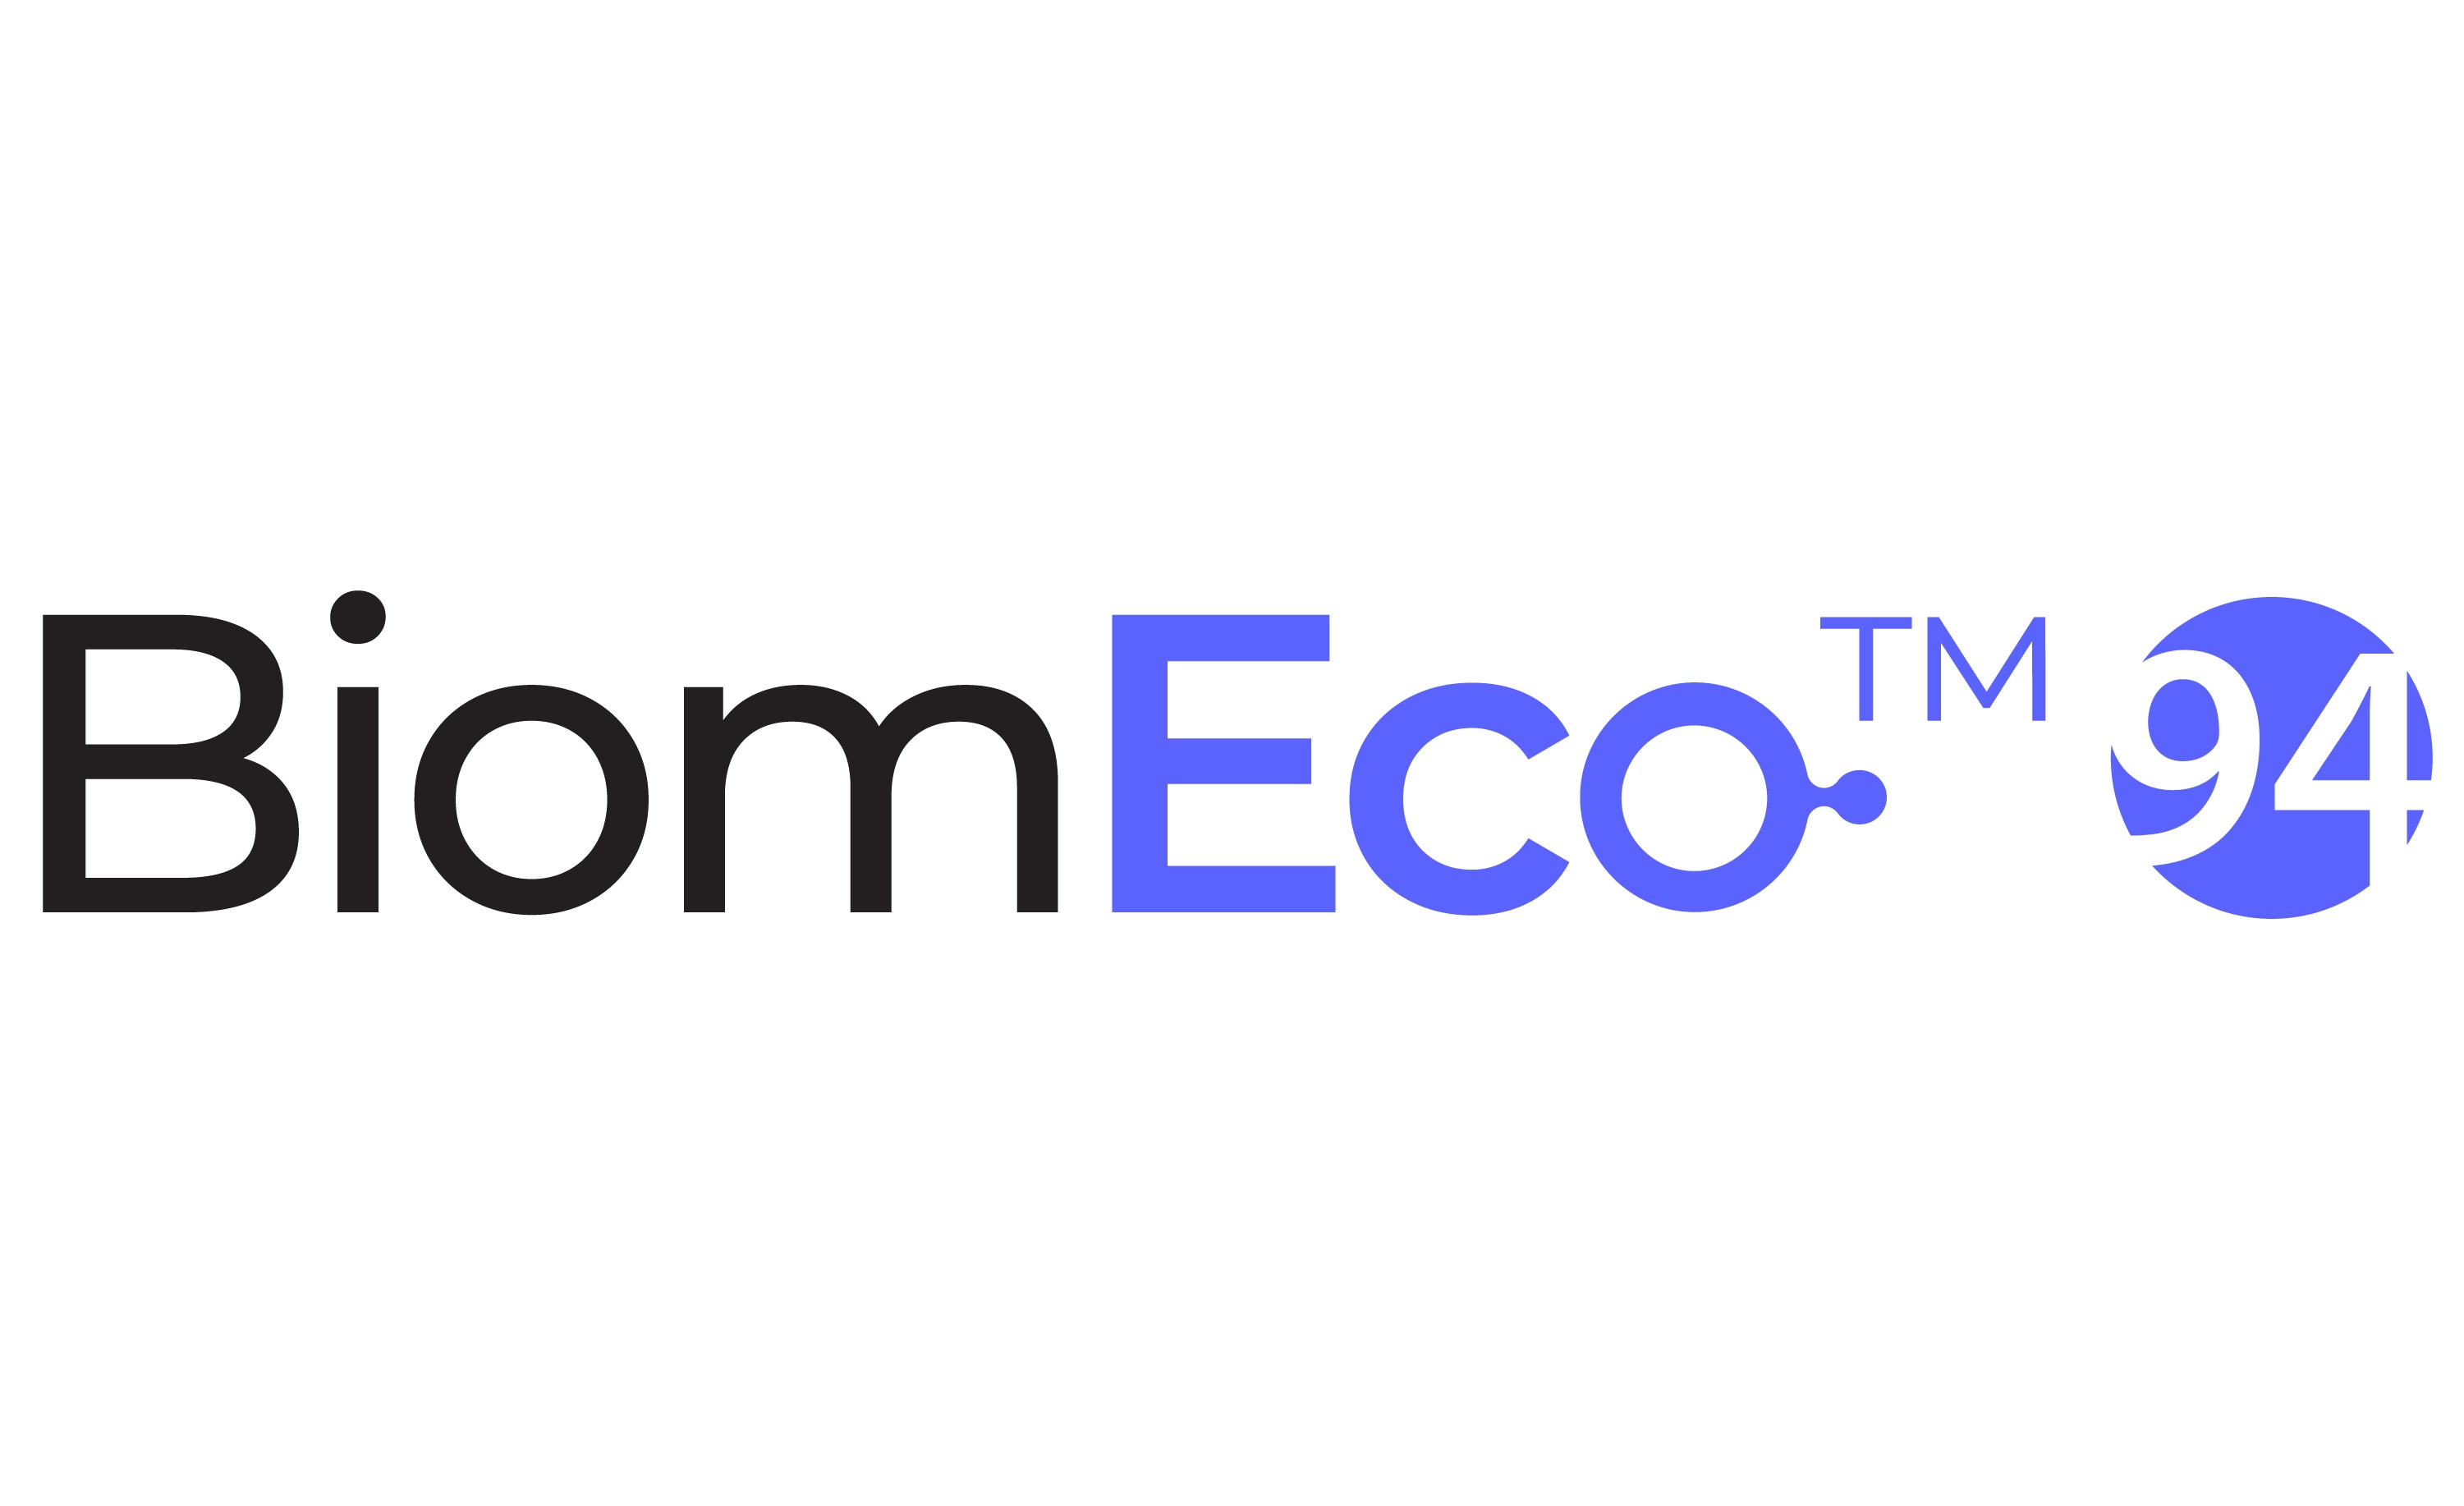 BiomEco 94 logo